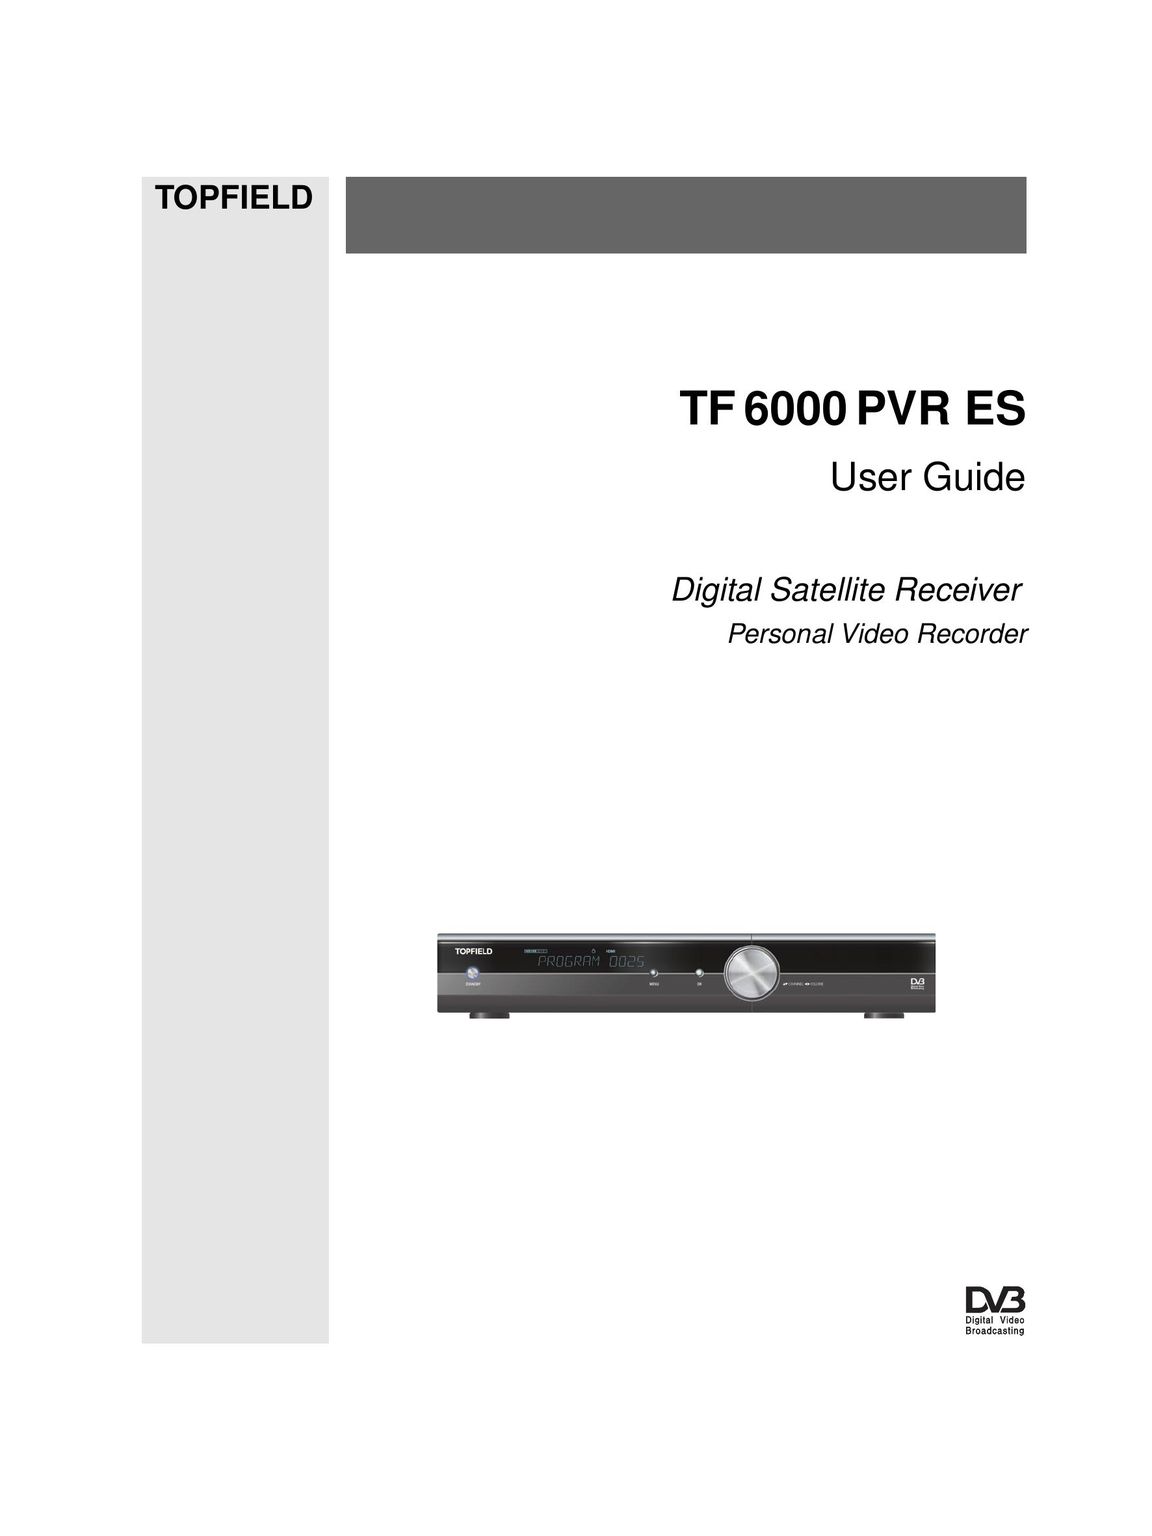 Topfield TF 6000 PVR ES Satellite TV System User Manual